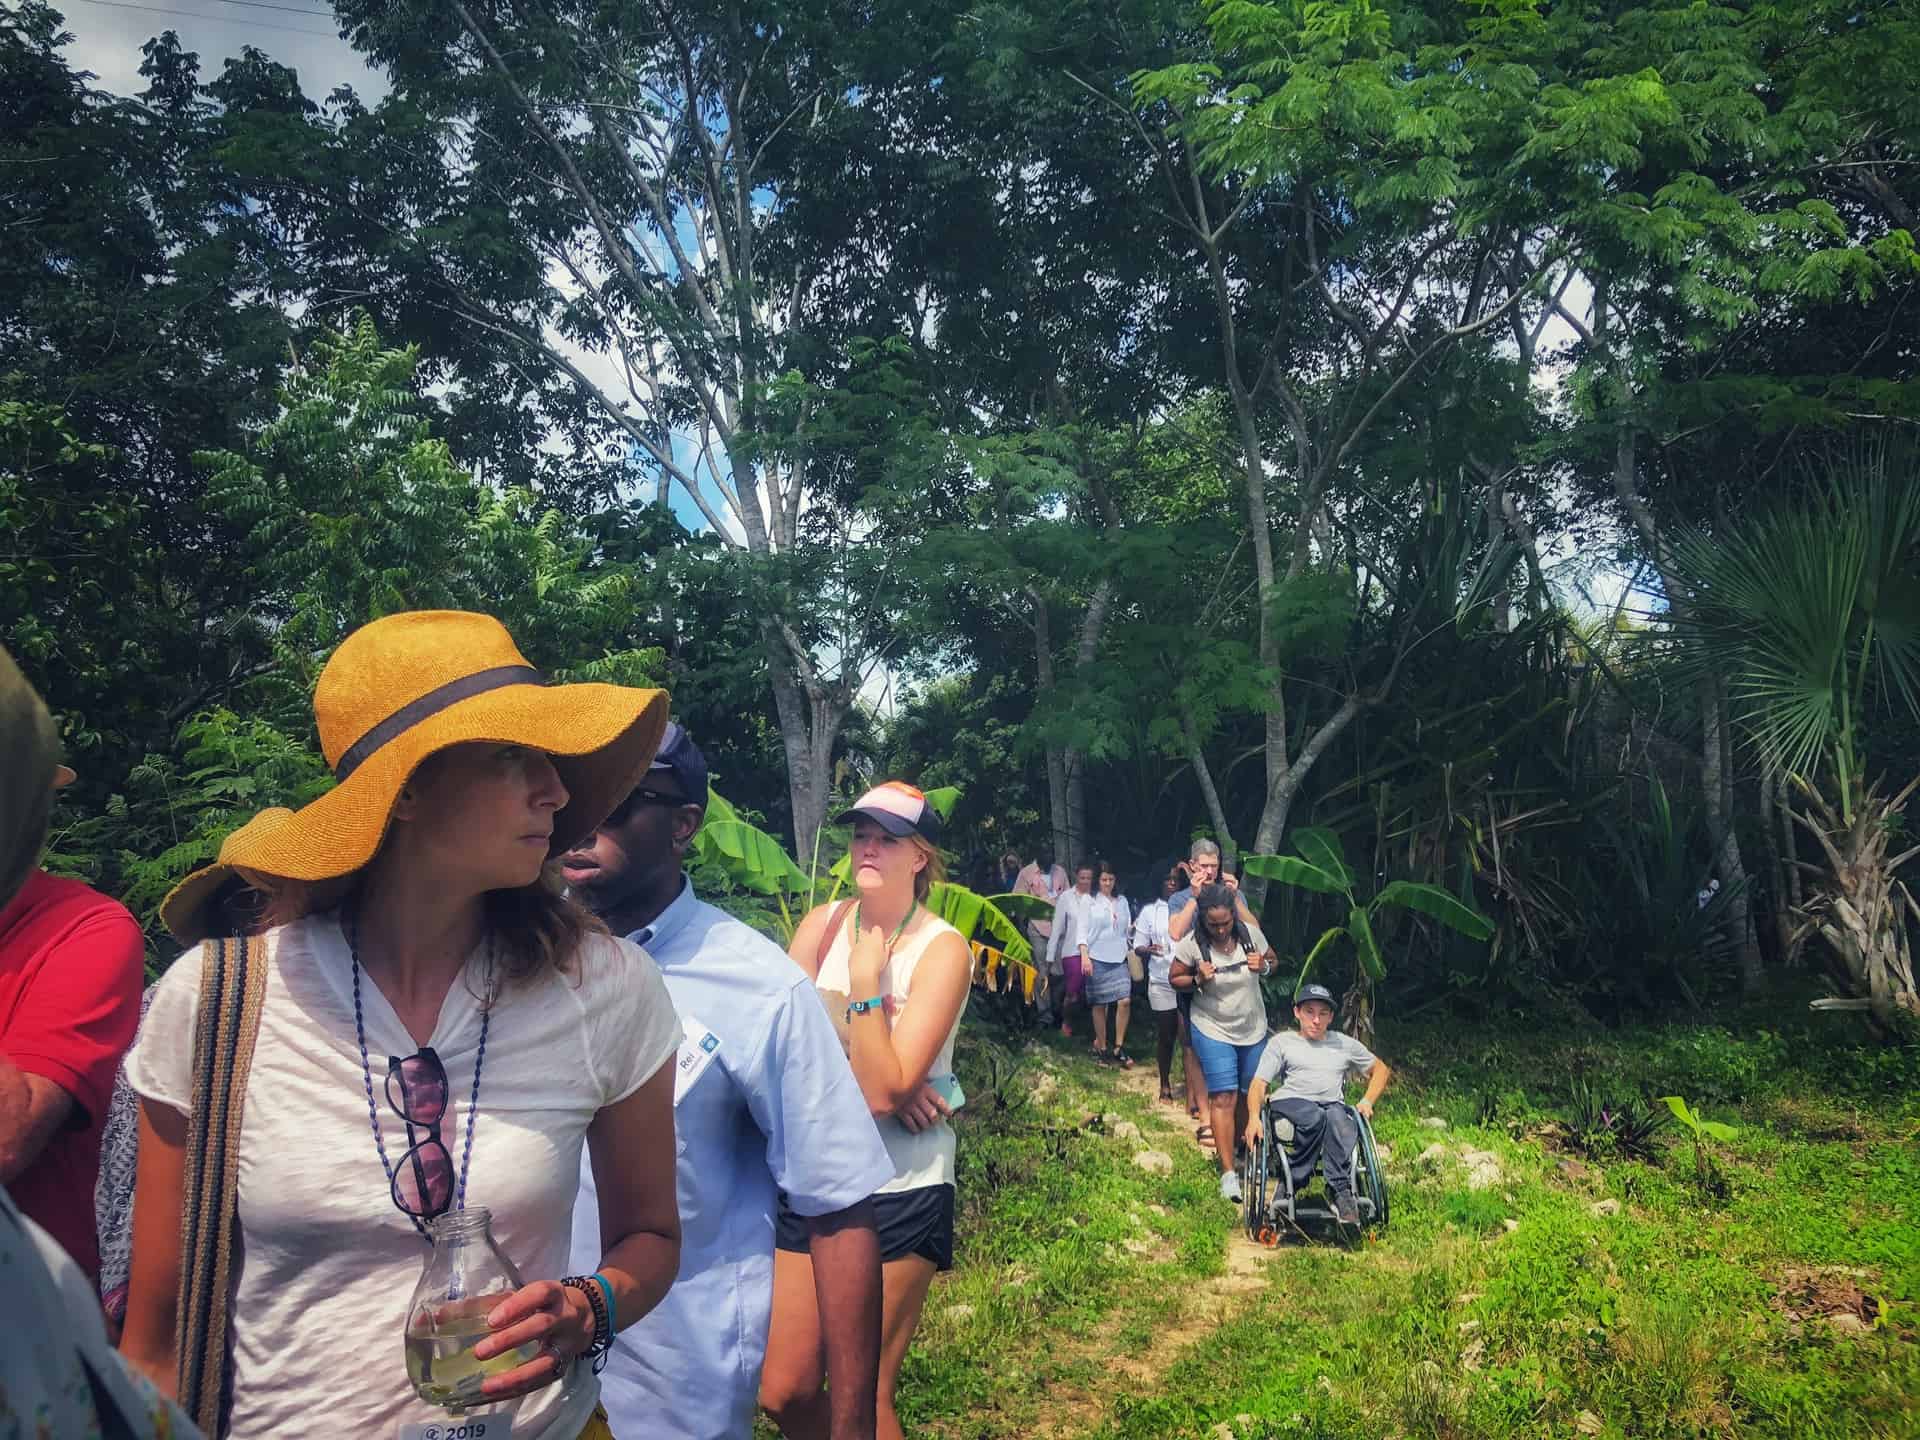 OC attendees traveling single file on a jungle-like path.